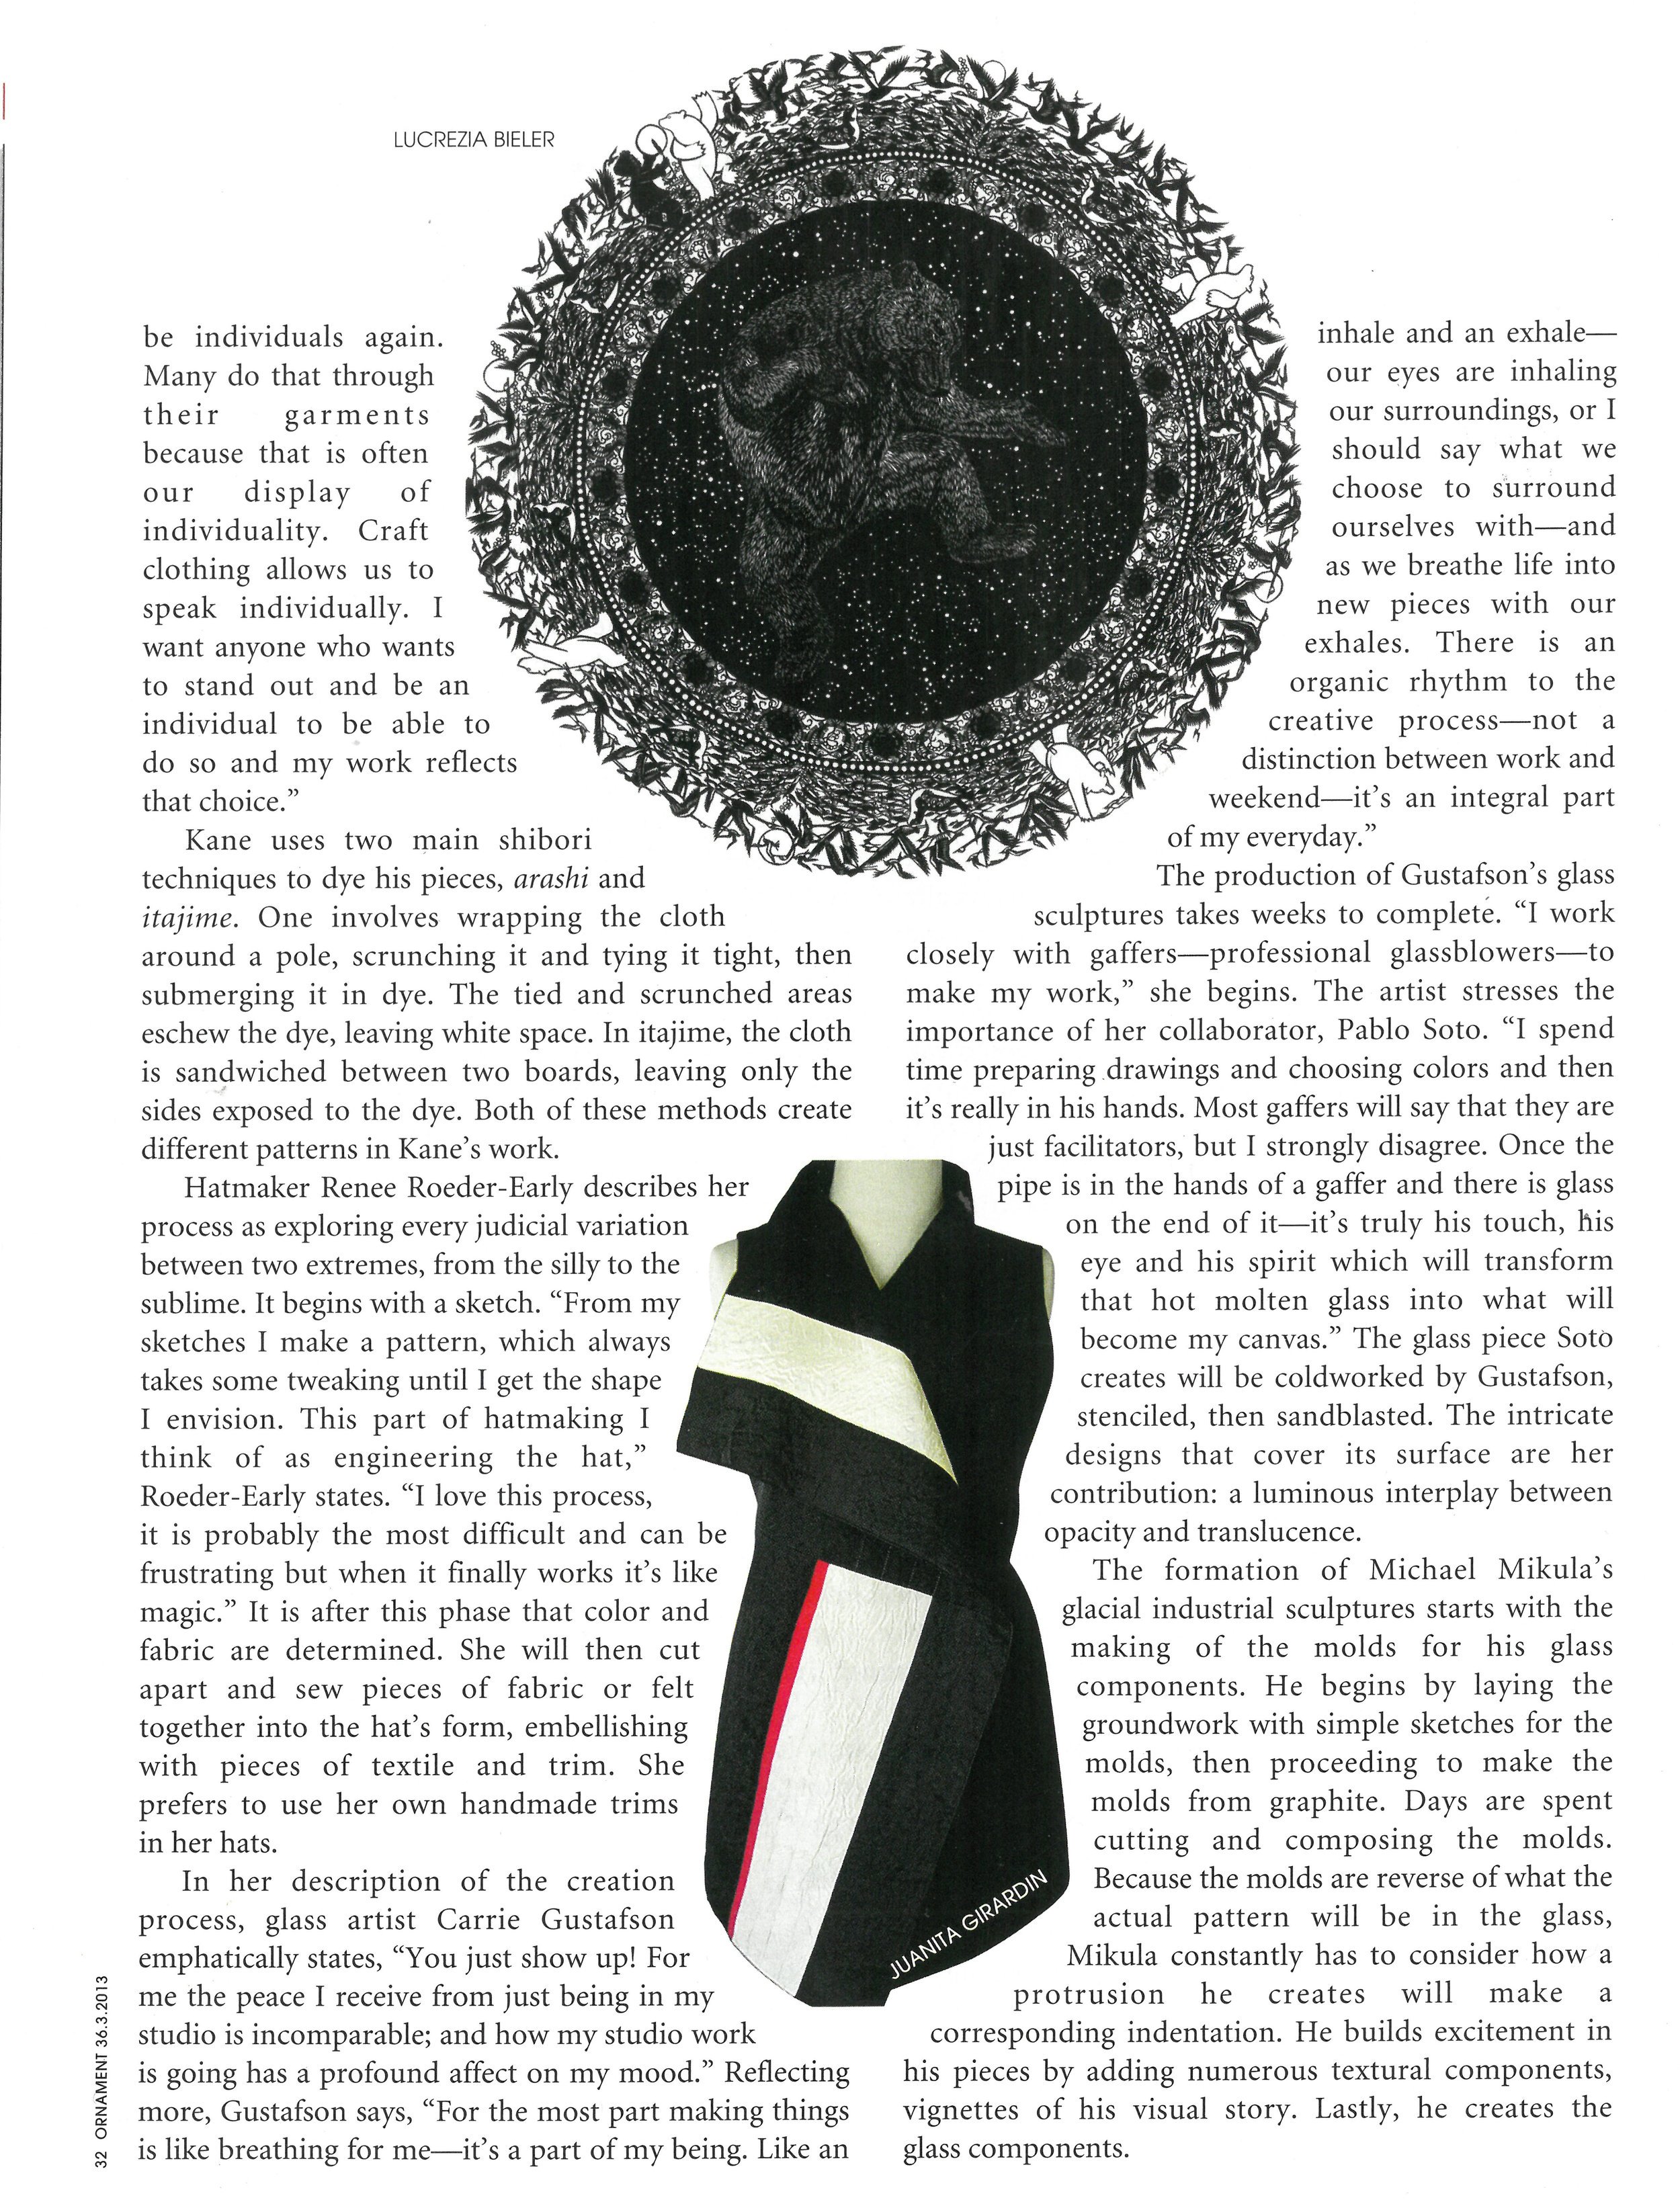 Ornament Magazine article featuring glass artist Carrie Gustafson